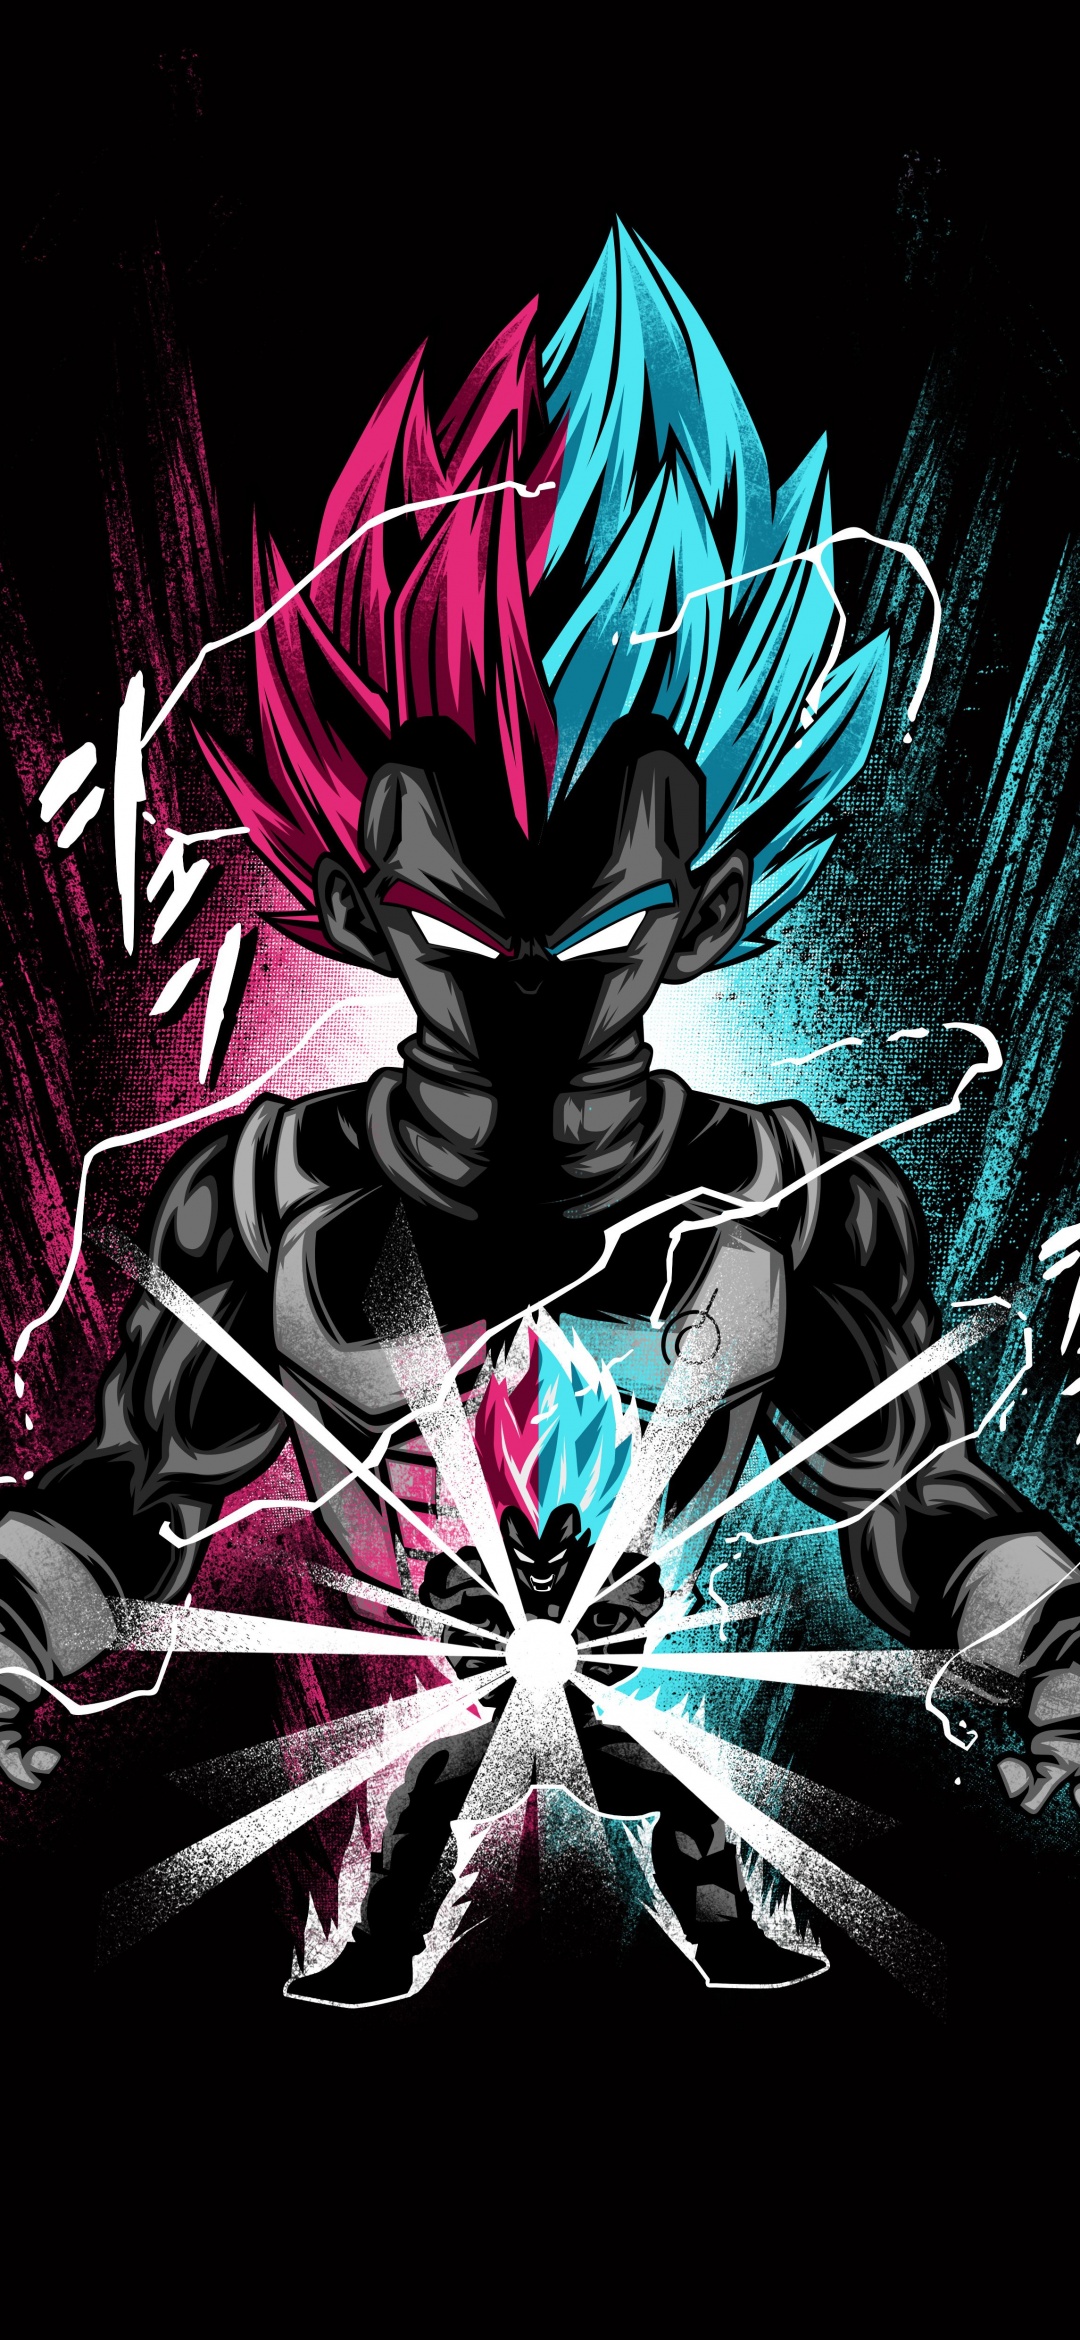 Vegeta 4K Wallpaper, Dragon Ball Z, Anime series, Black background